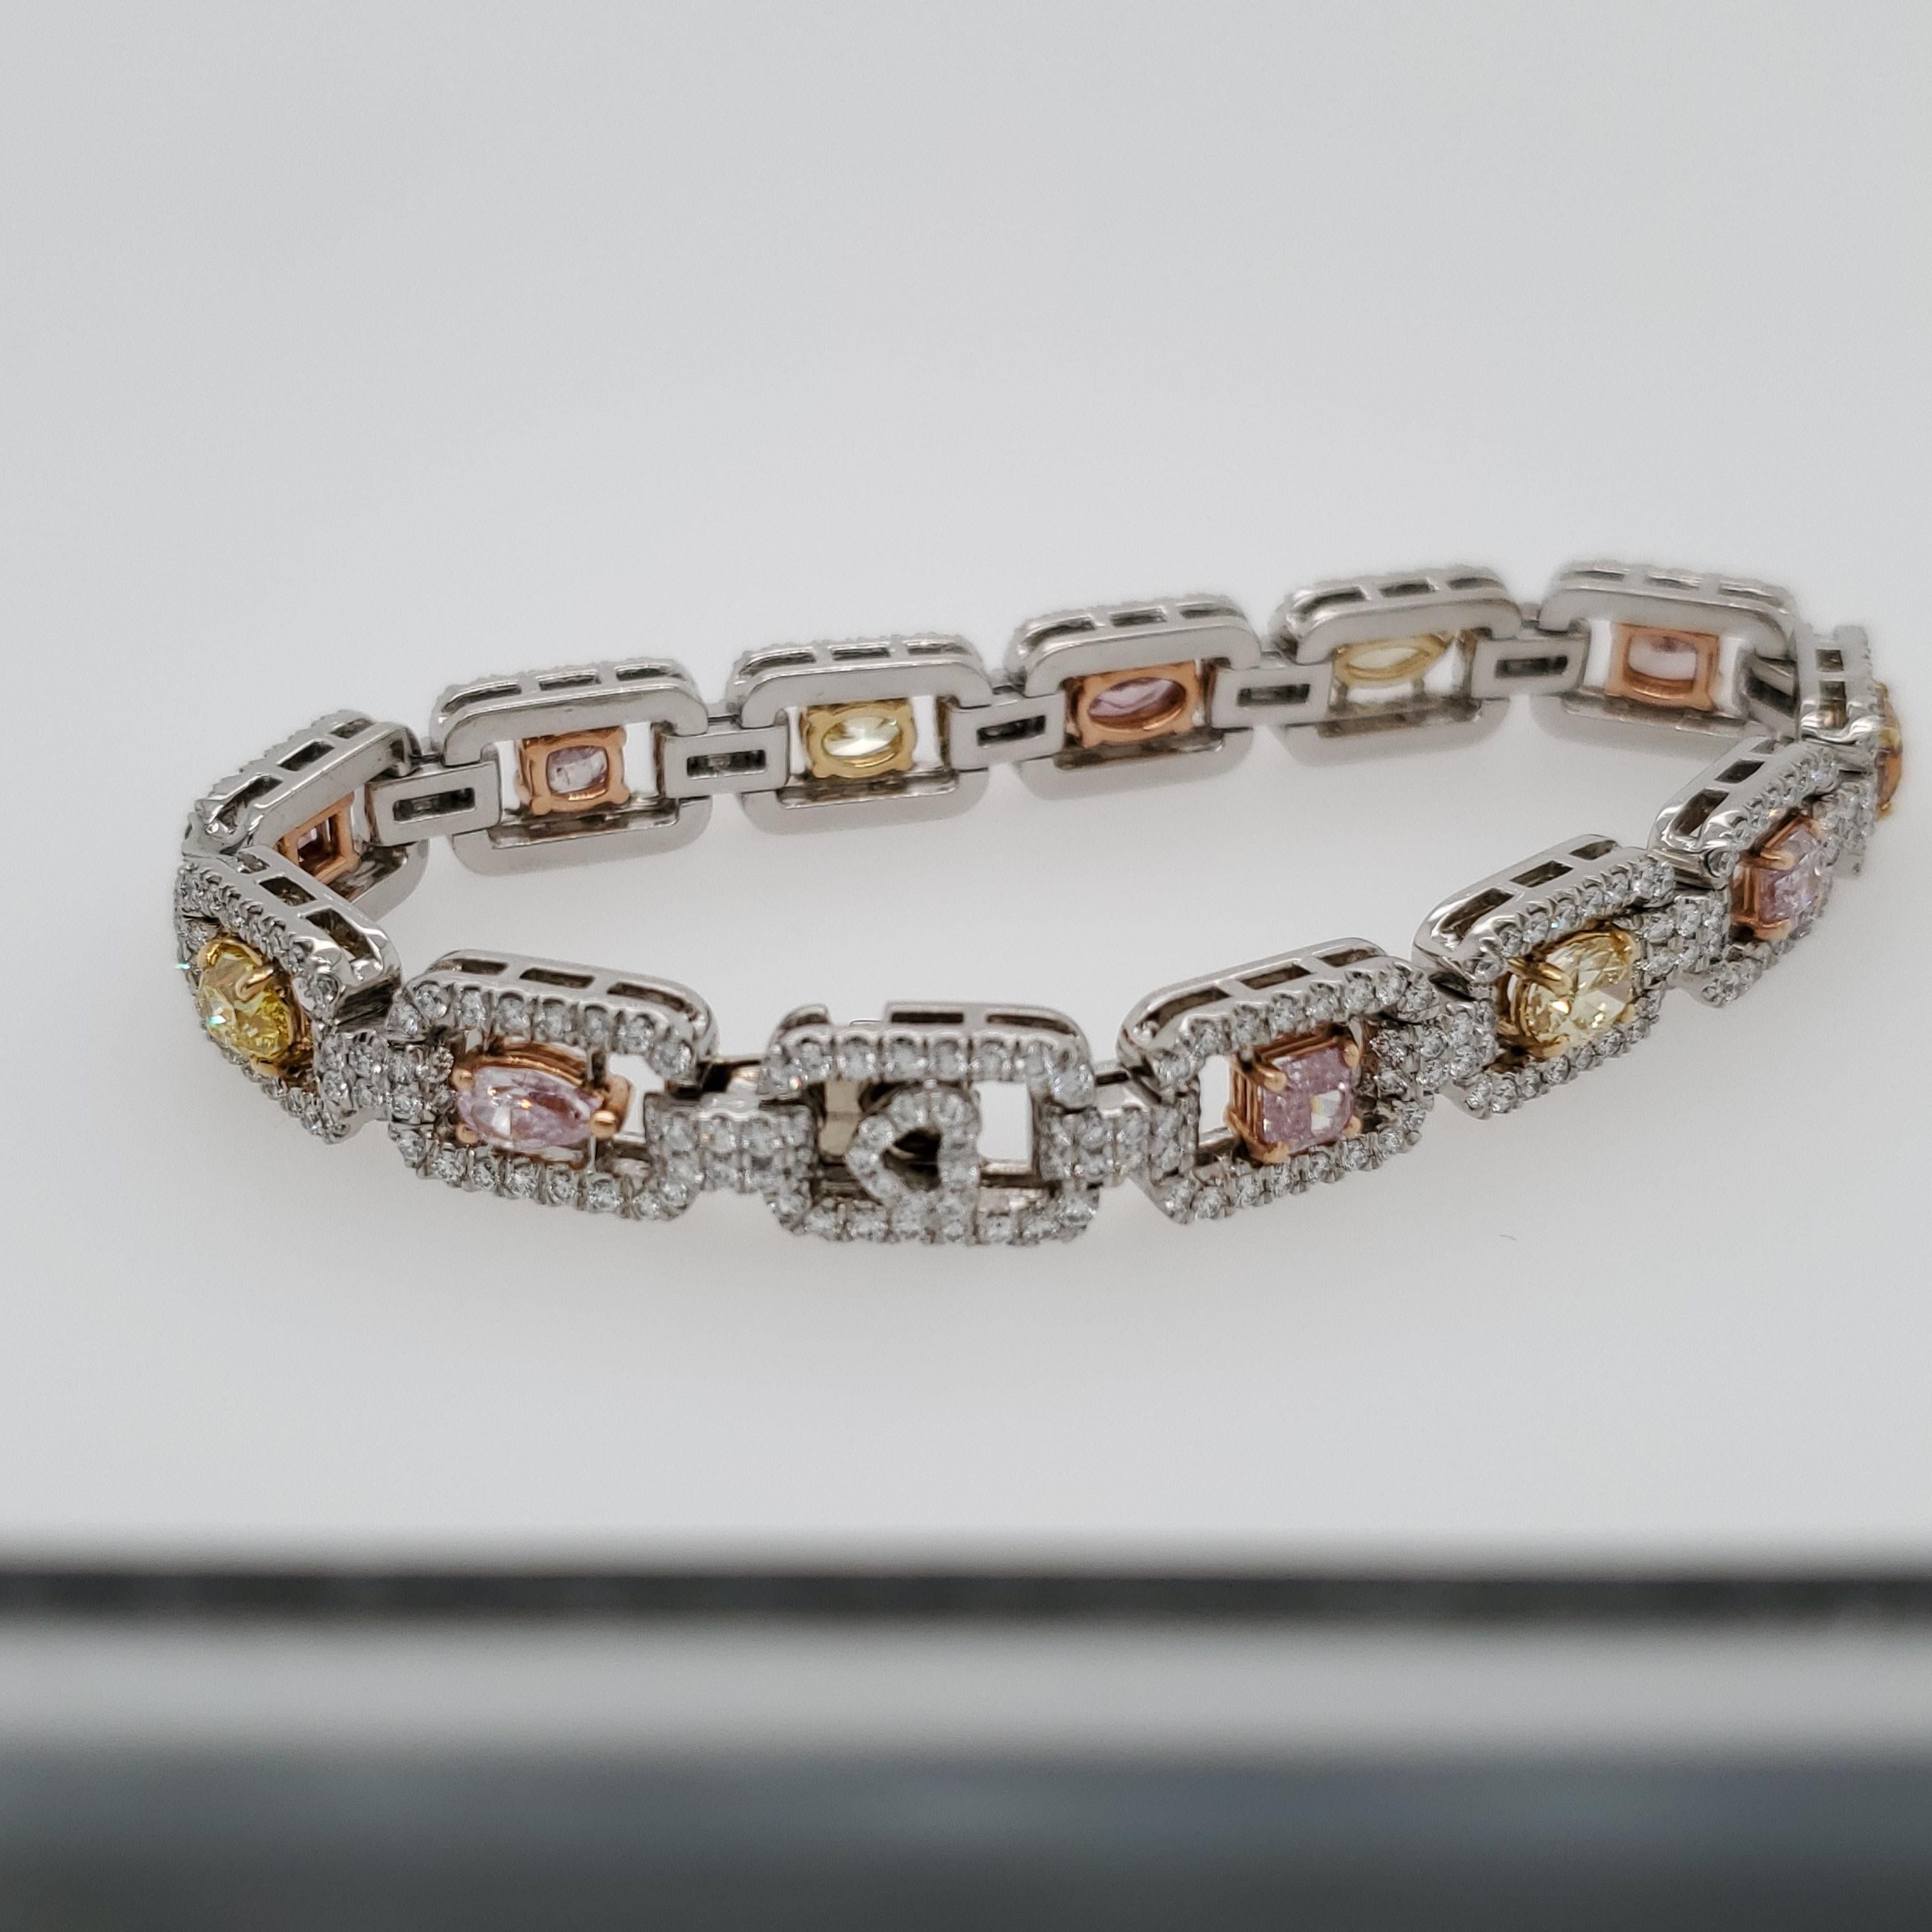 Women's All GIA certified Fancy Color Diamond bracelet with 11.48 Carat